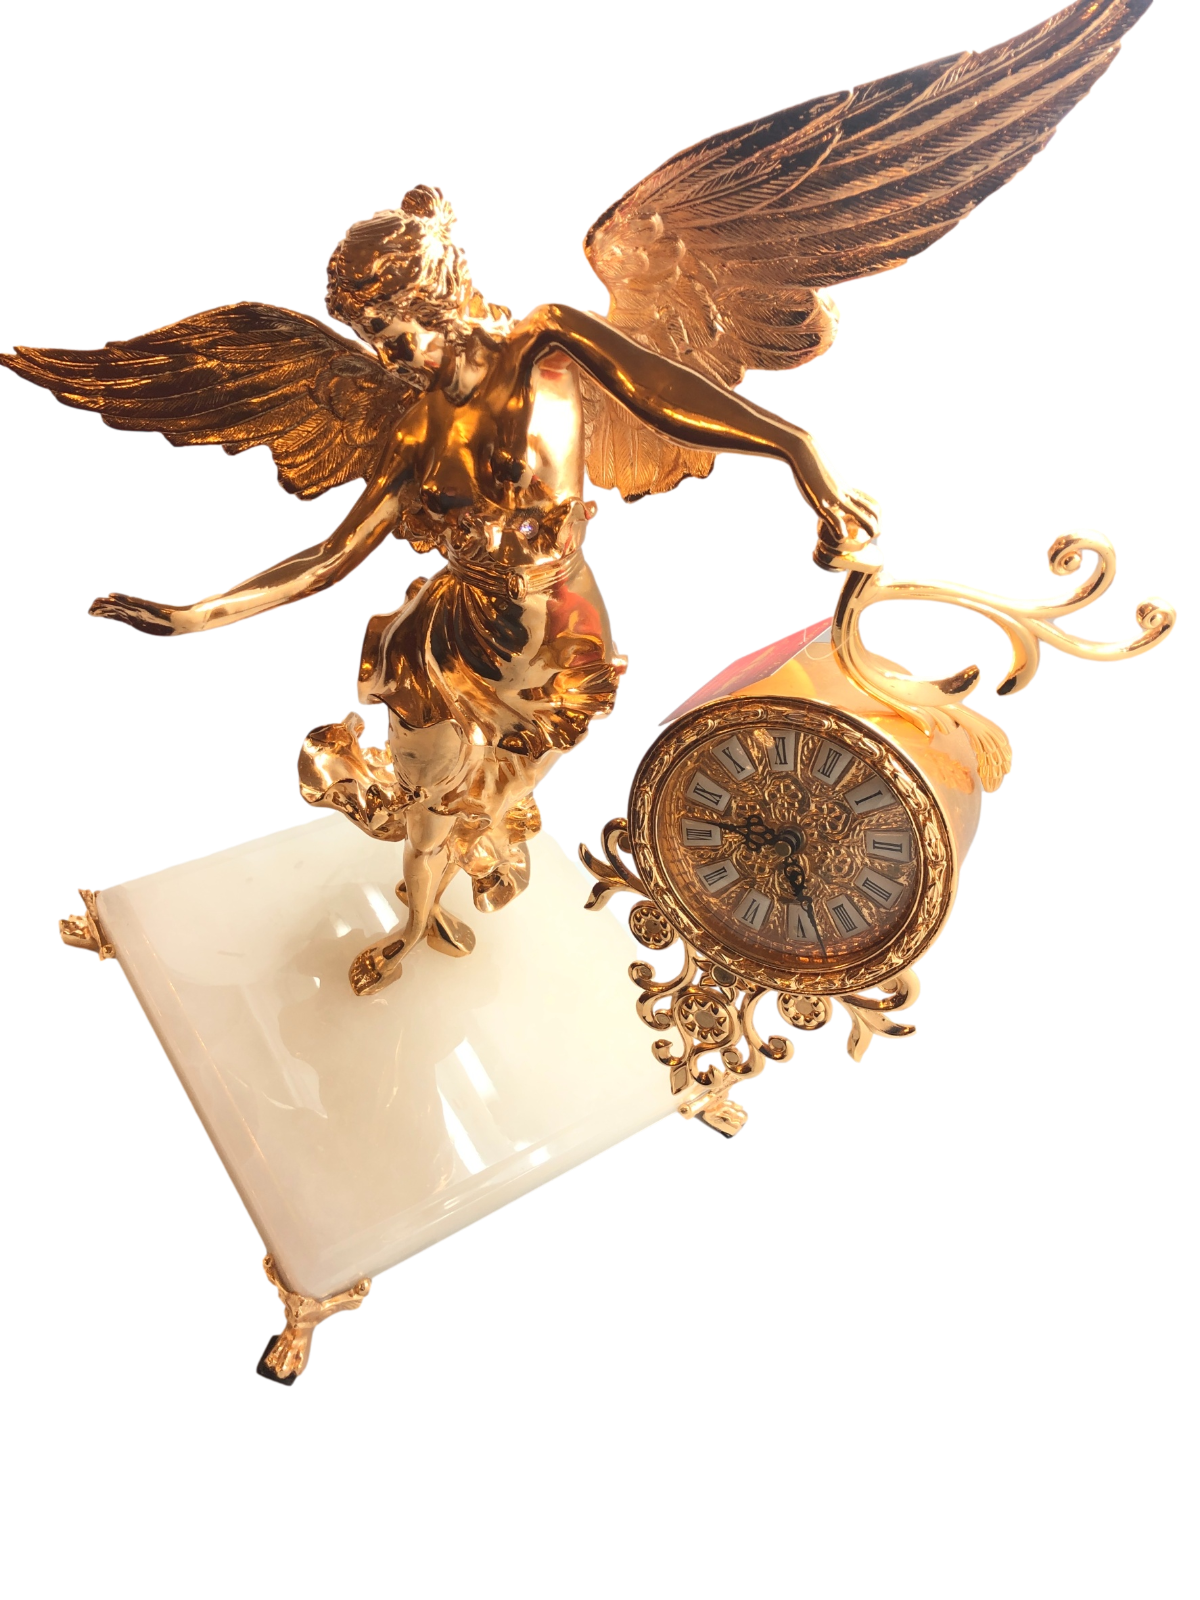 Fireplace mantelpiece clock with angel figure